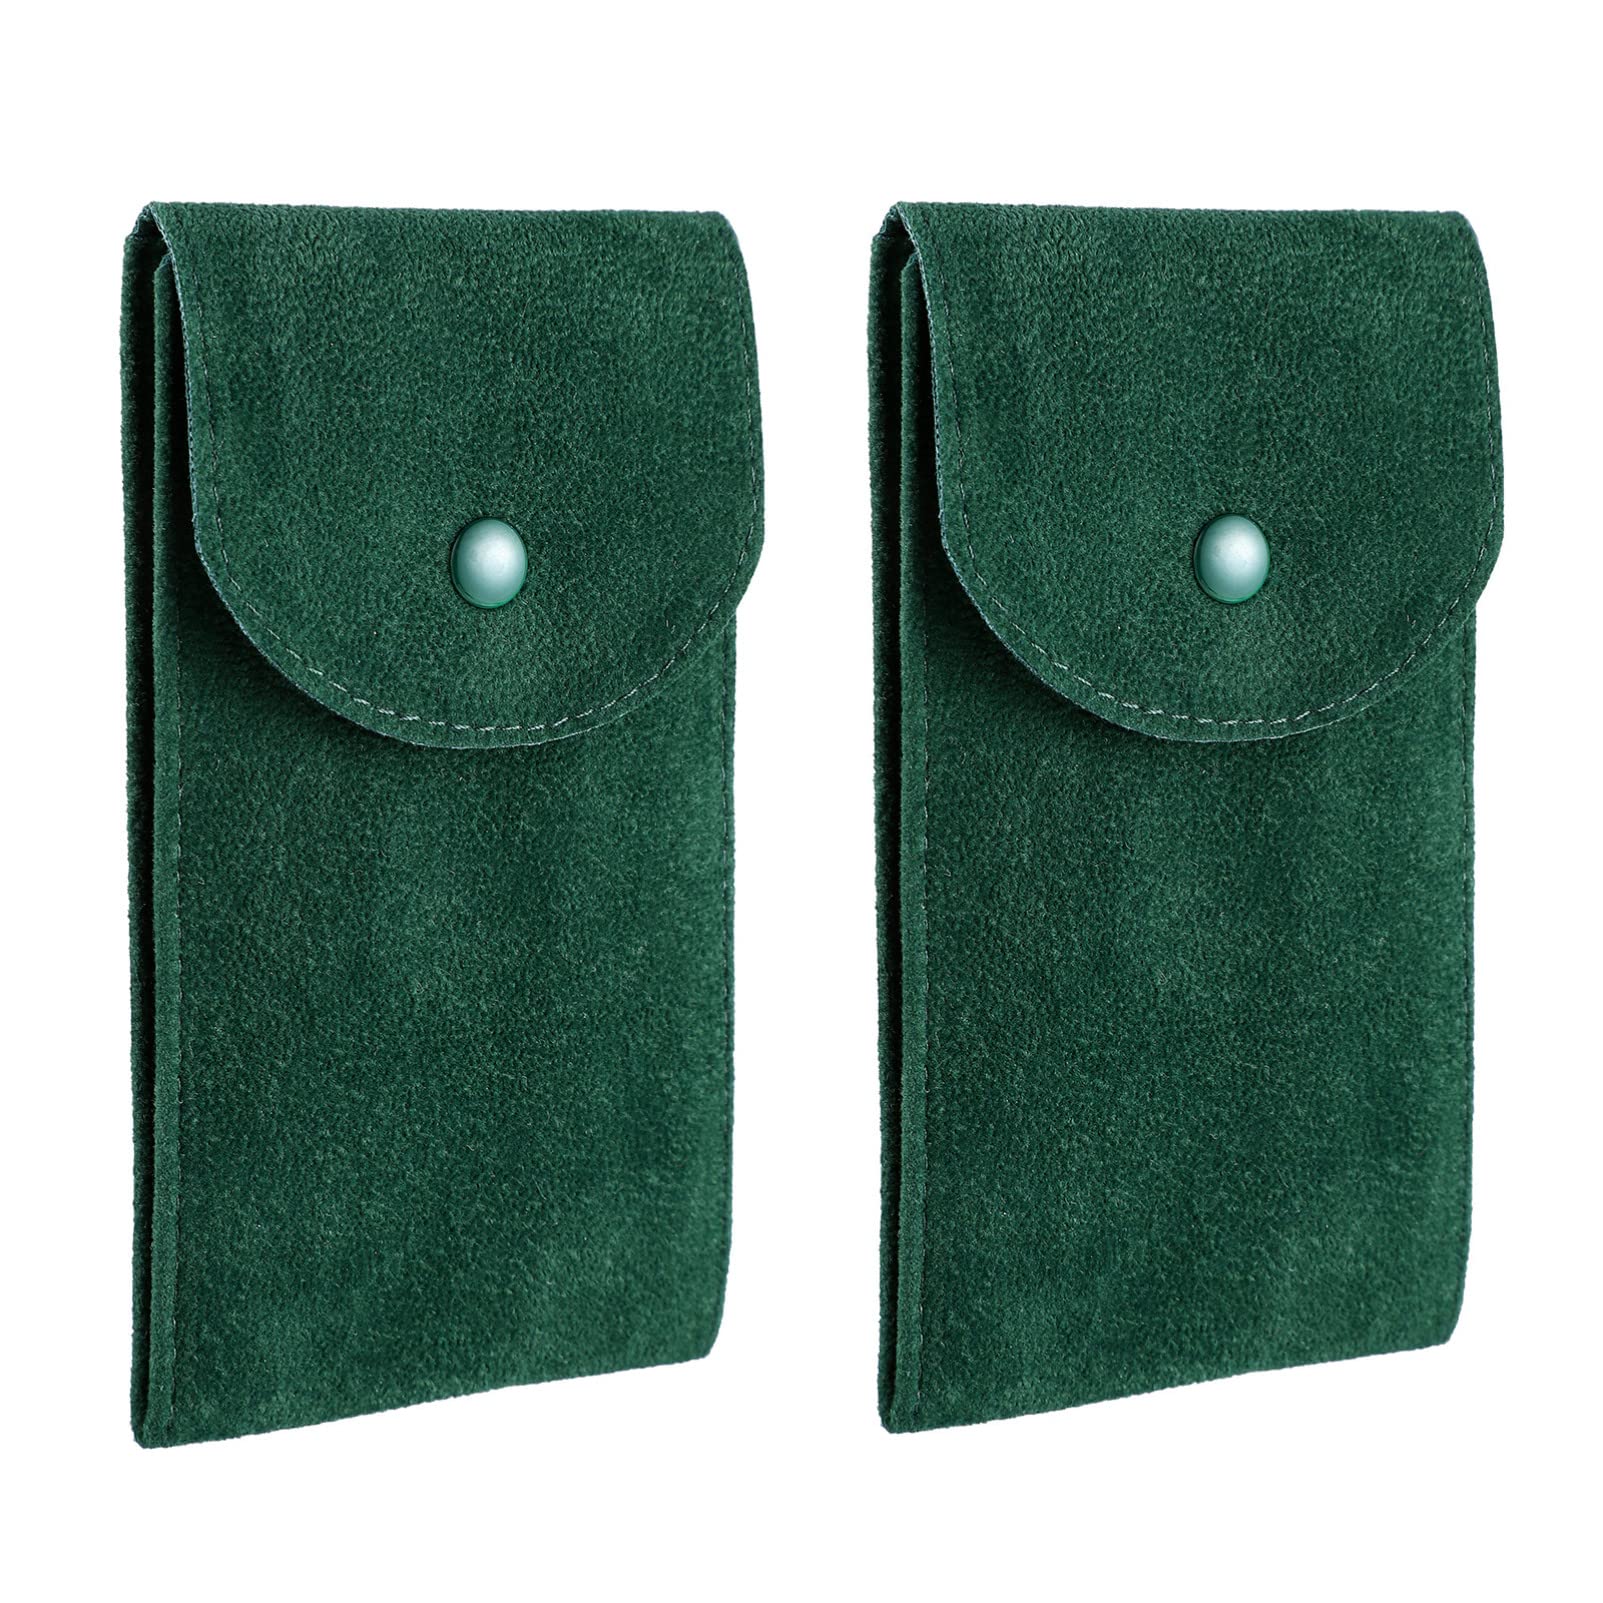 Hemobllo 2pcs Green Watch Pouch Flannelette Fabric Watch Bag Watch Durable Travel Pouch Case